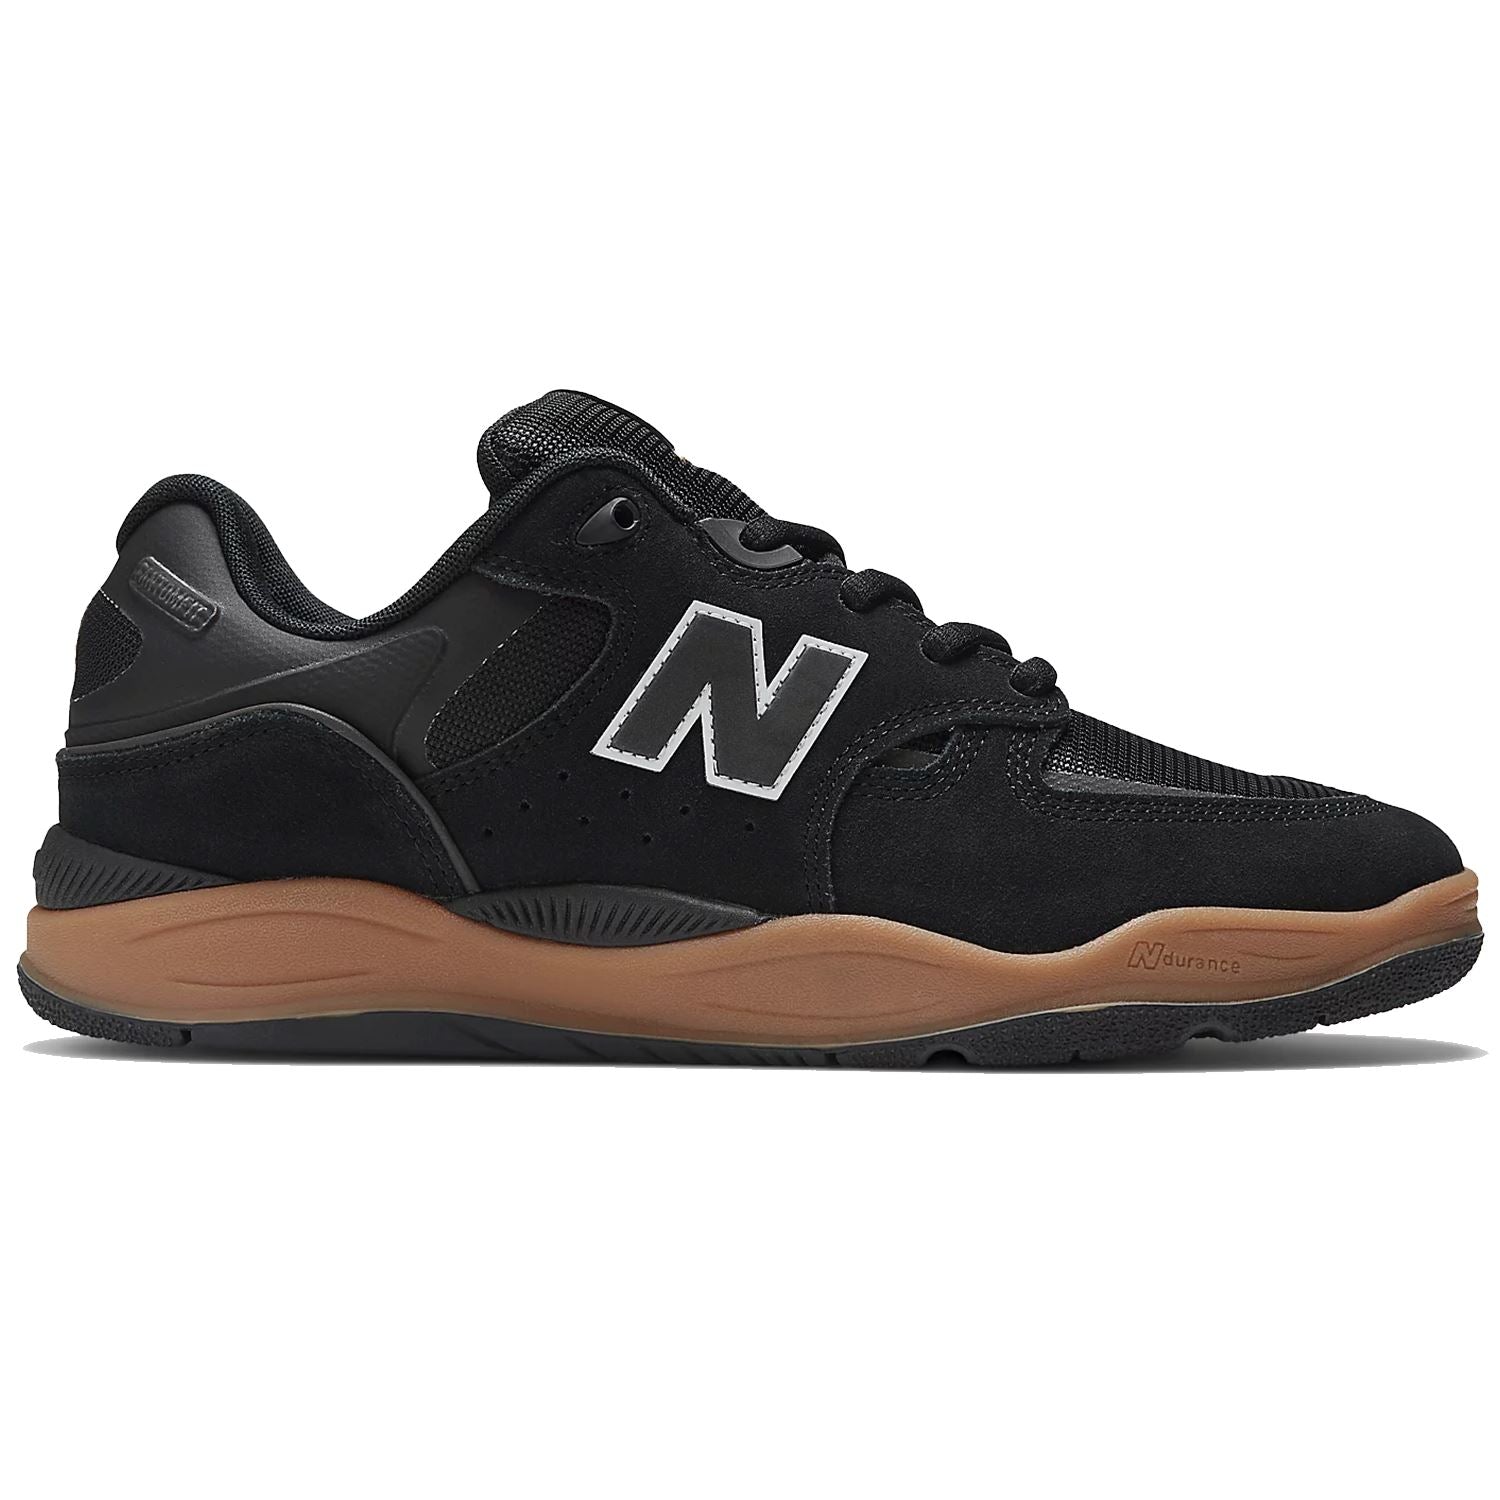 New Balance Numeric Tiago NM1010 Black/Gum footwear New Balance Numeric 